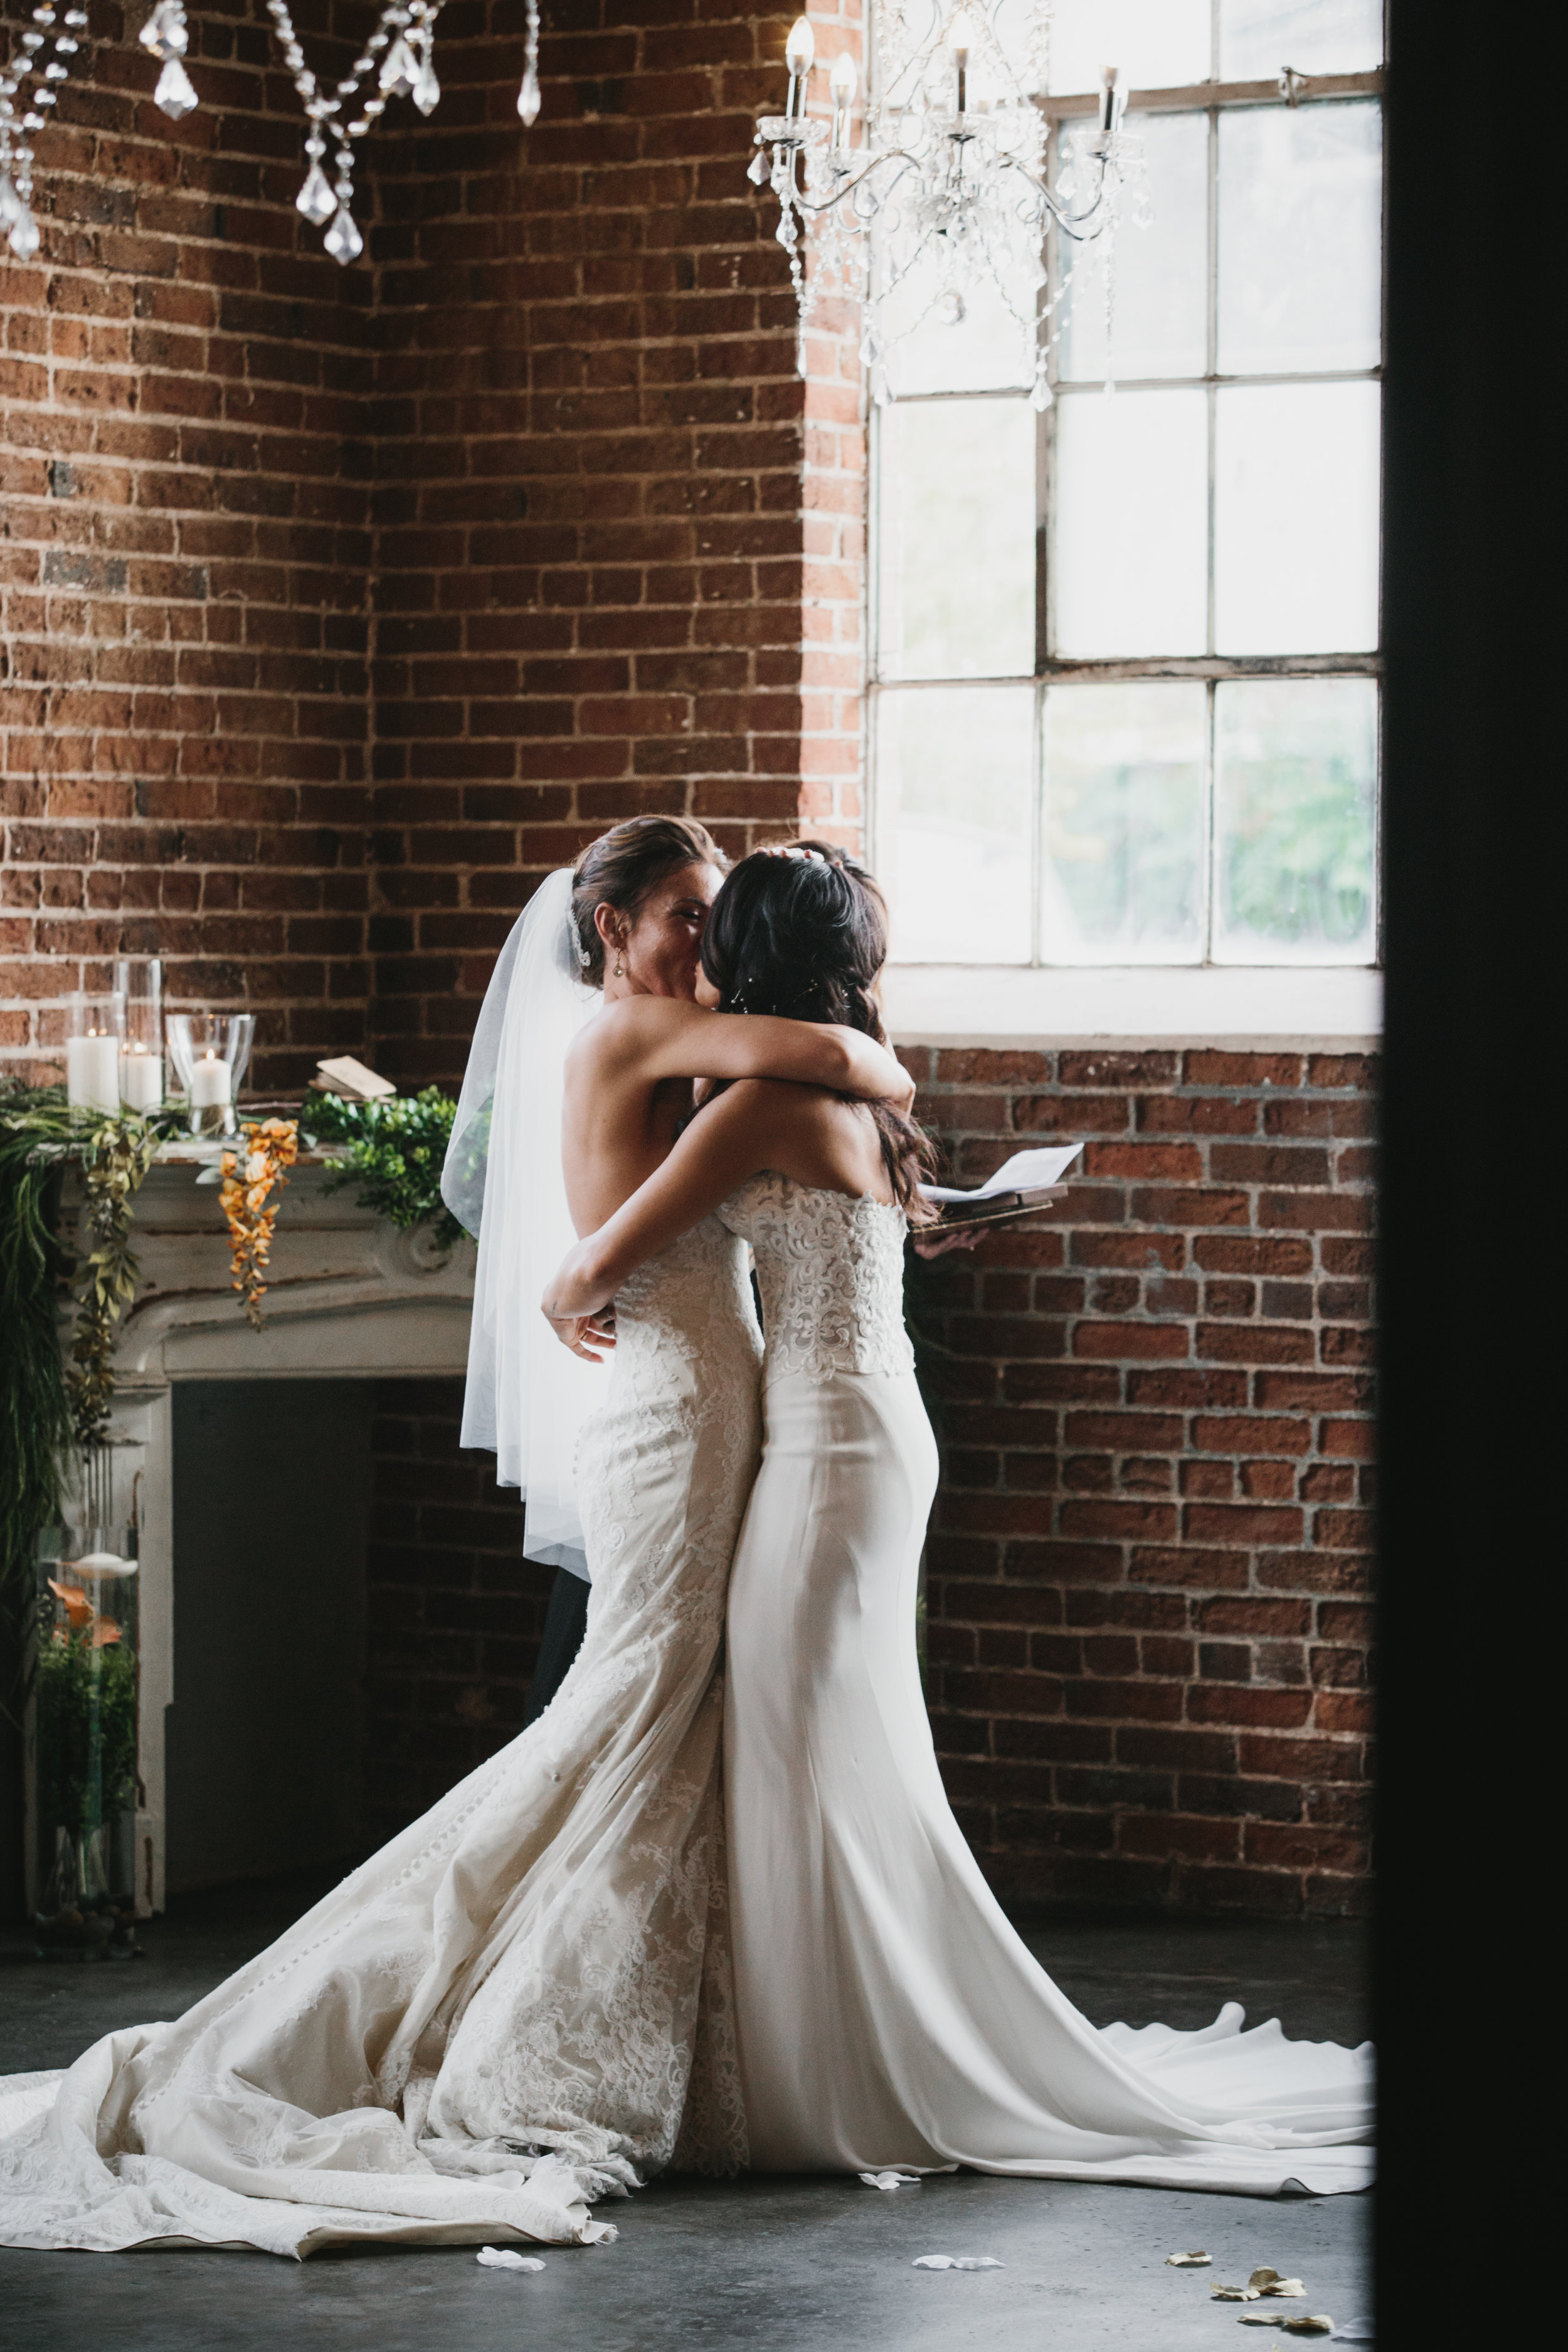  Emily + Jovan | Denver Union Station Wedding | Matthew Christopher Cosette gown from Little White Dress Bridal Shop | Photo by We Are Matt + Jess 